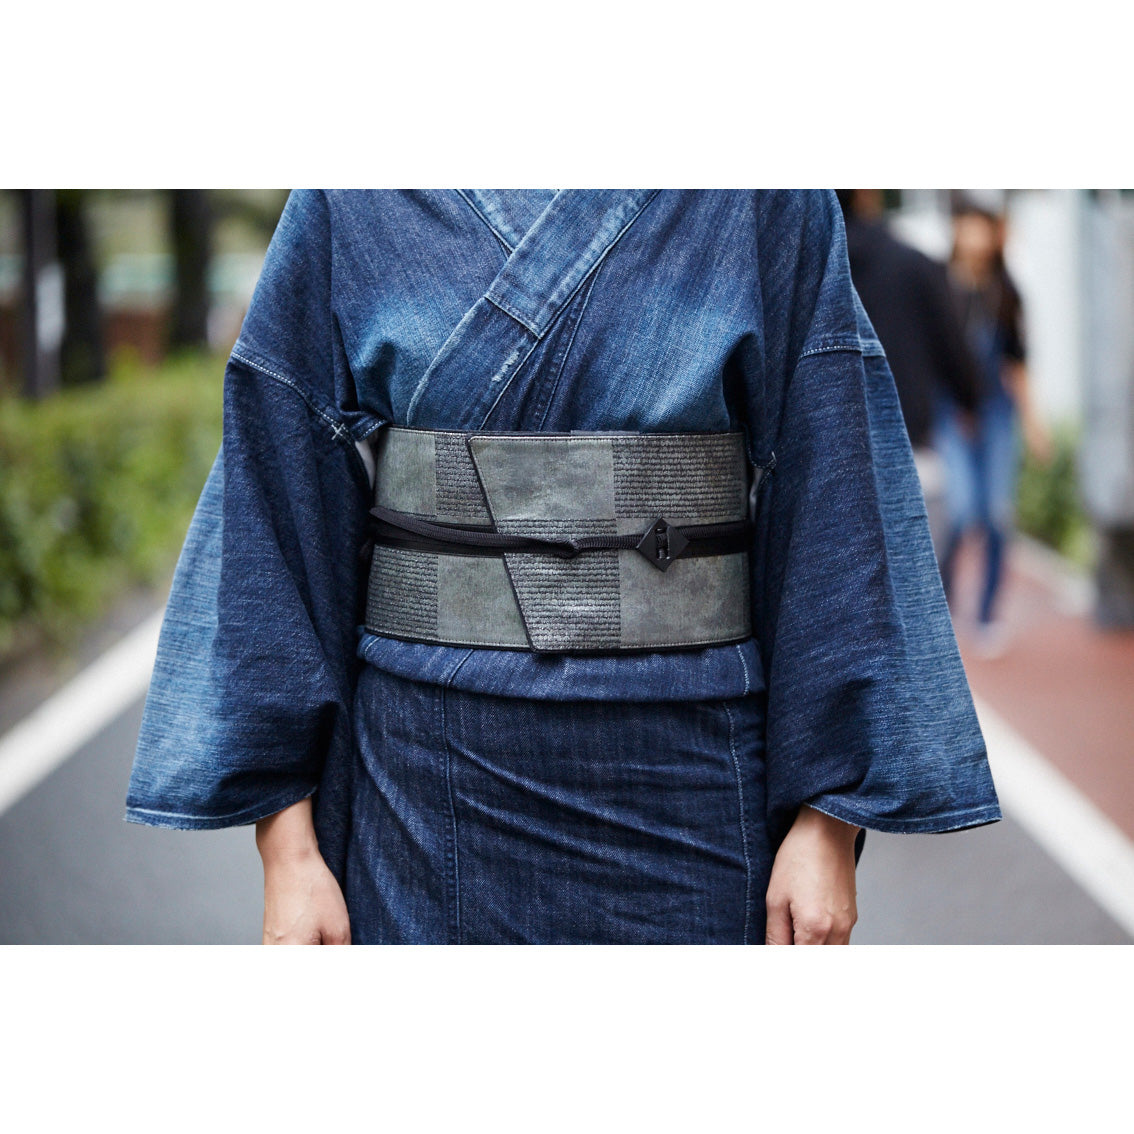 Belt "Silver foil checkered" Nishijin woven silk